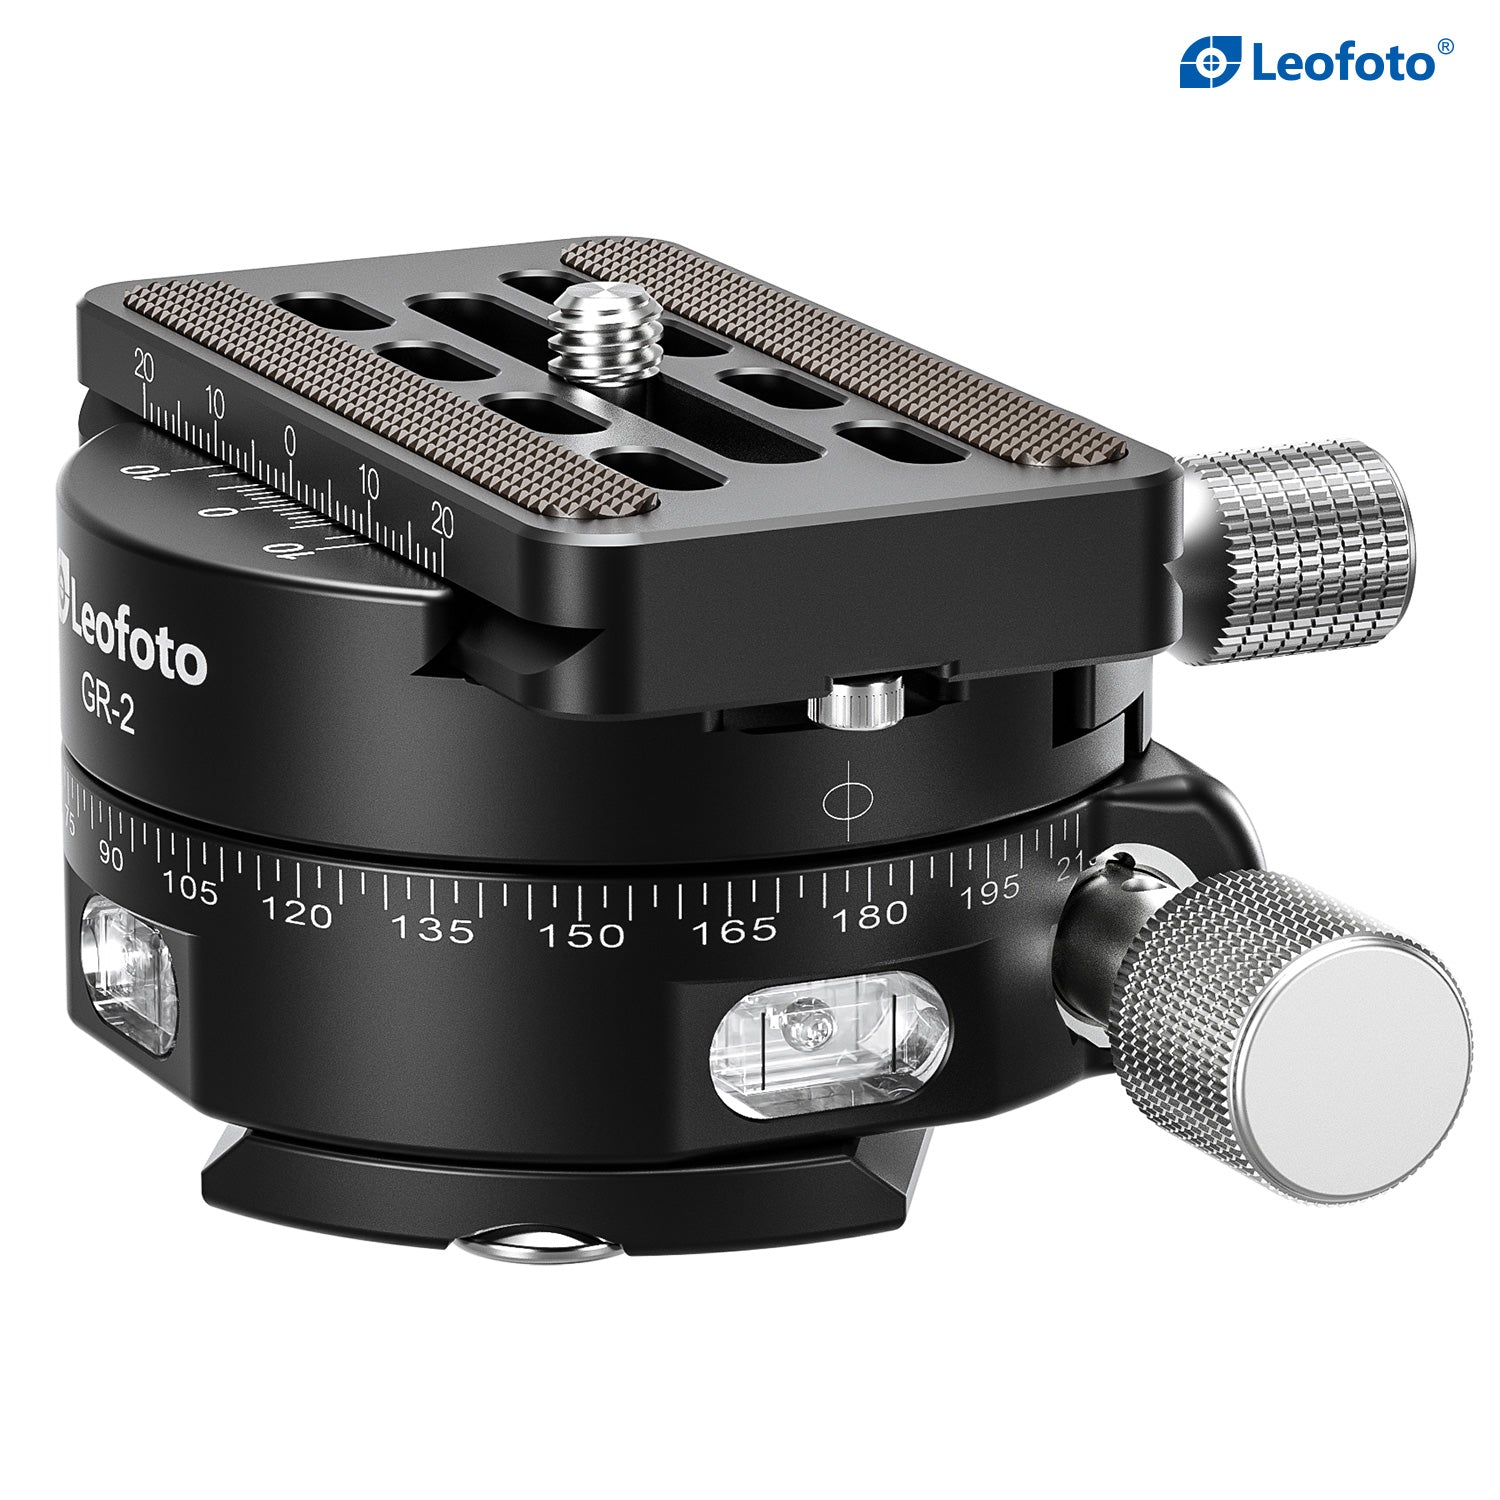 Leofoto GR-2 Geared Panning Adapter | Arca Compatible